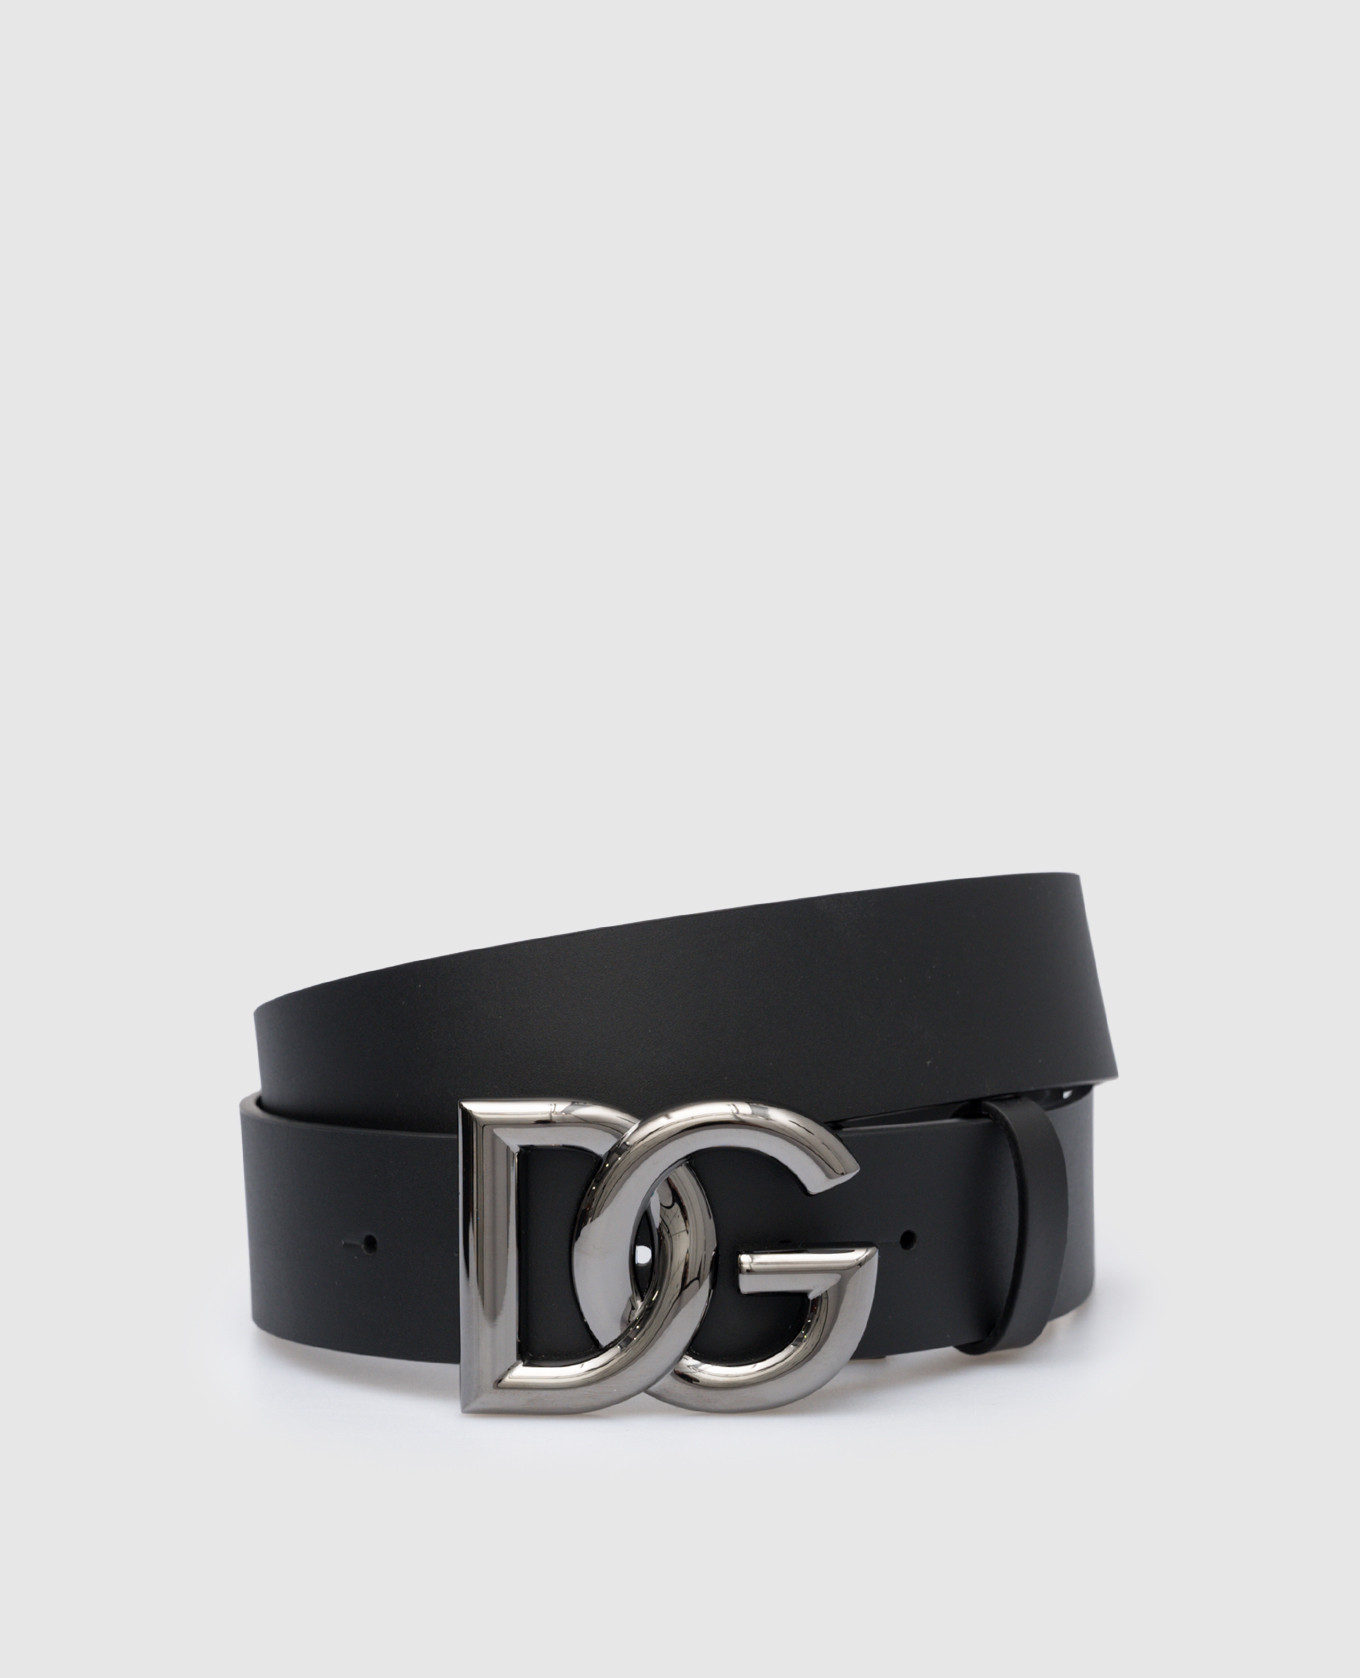 Cintura in pelle nera con fibbia logo DG